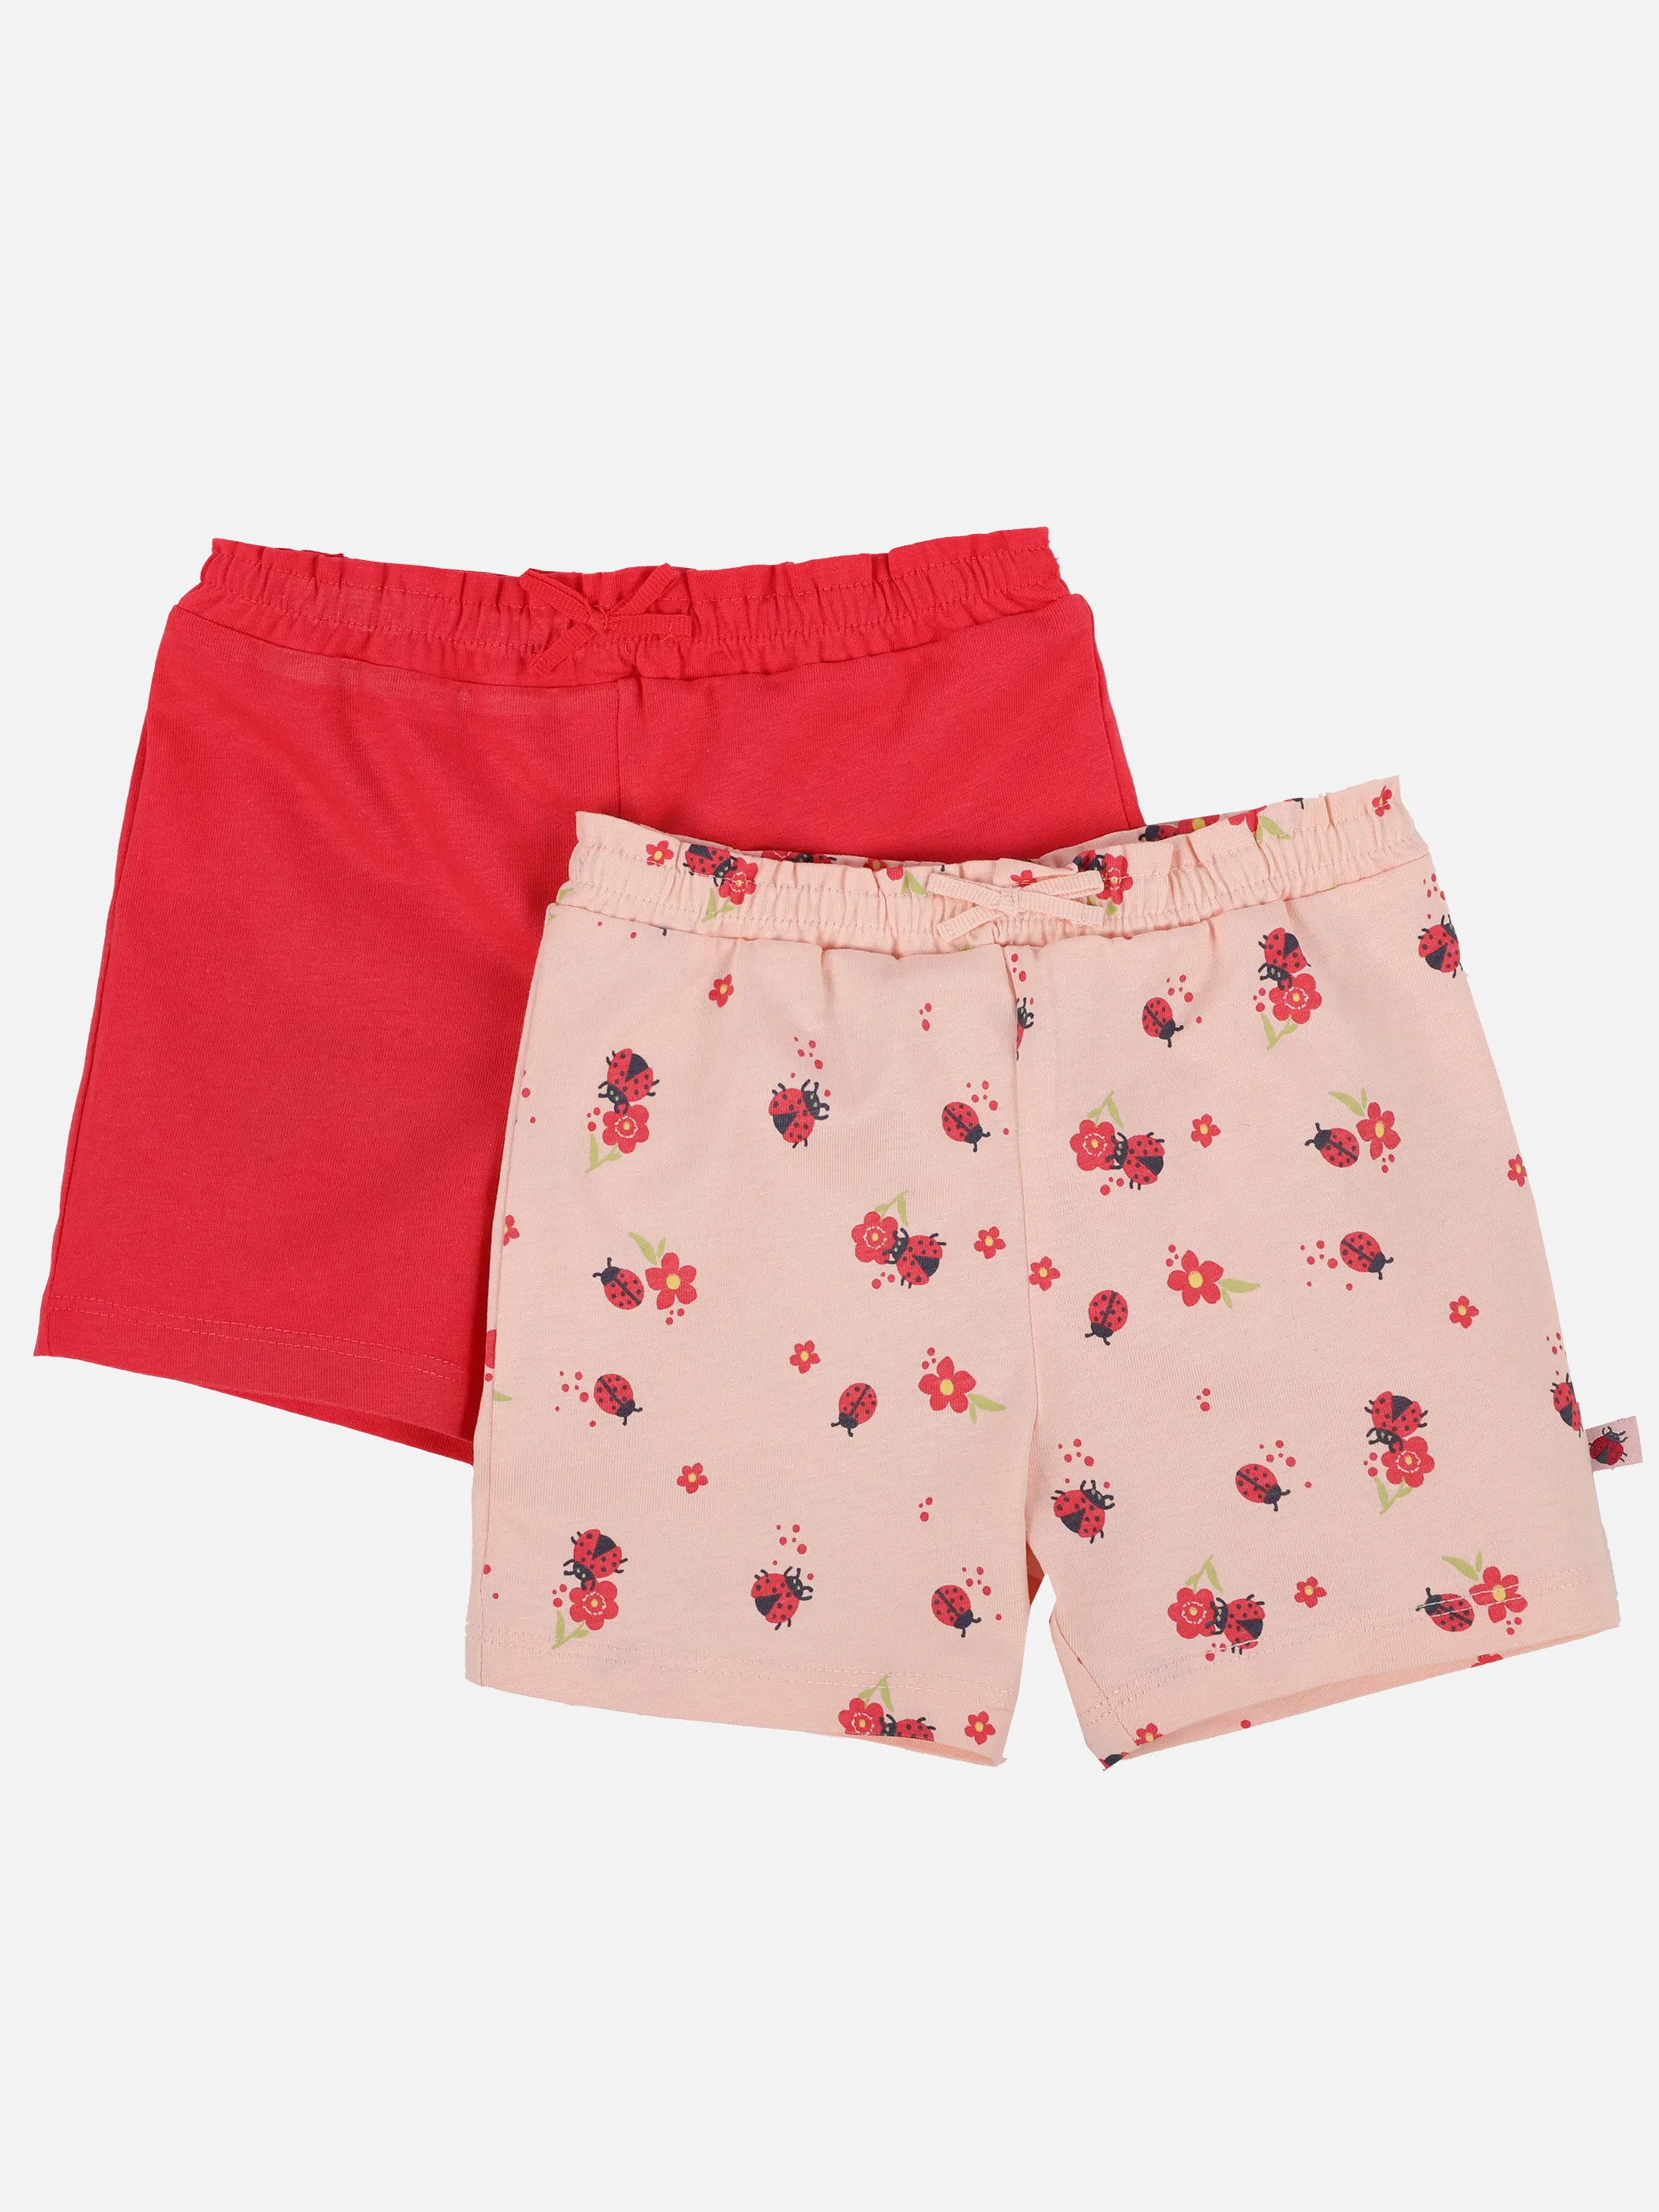 Bubble Gum BM 2er Pack Shorts in uni rot und rosa AOP Rosa 892635 ROSA/ROT 1